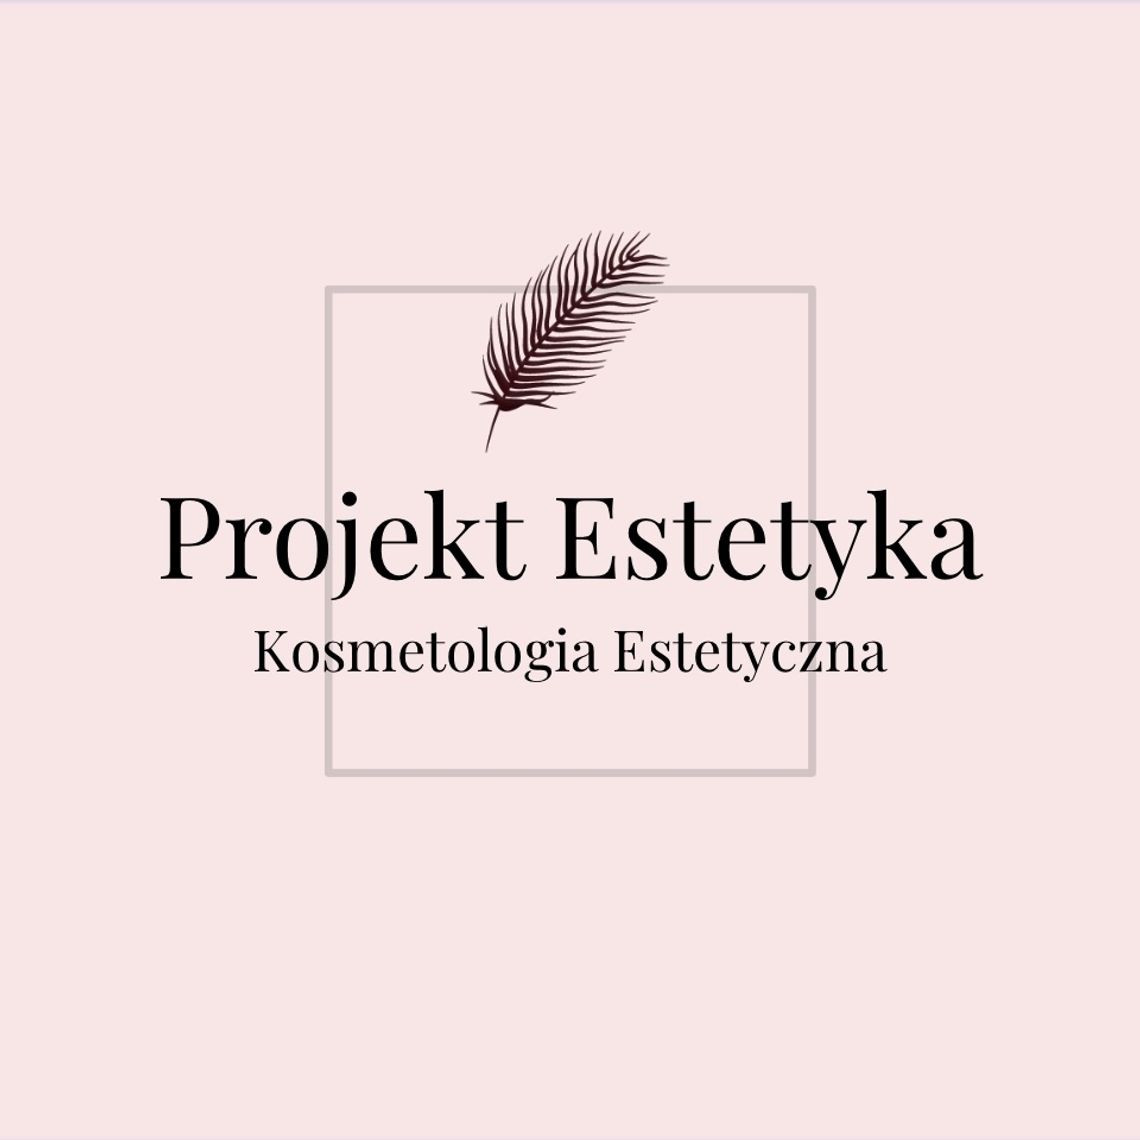 Gabinet Kosmetologiczny Projekt Estetyka